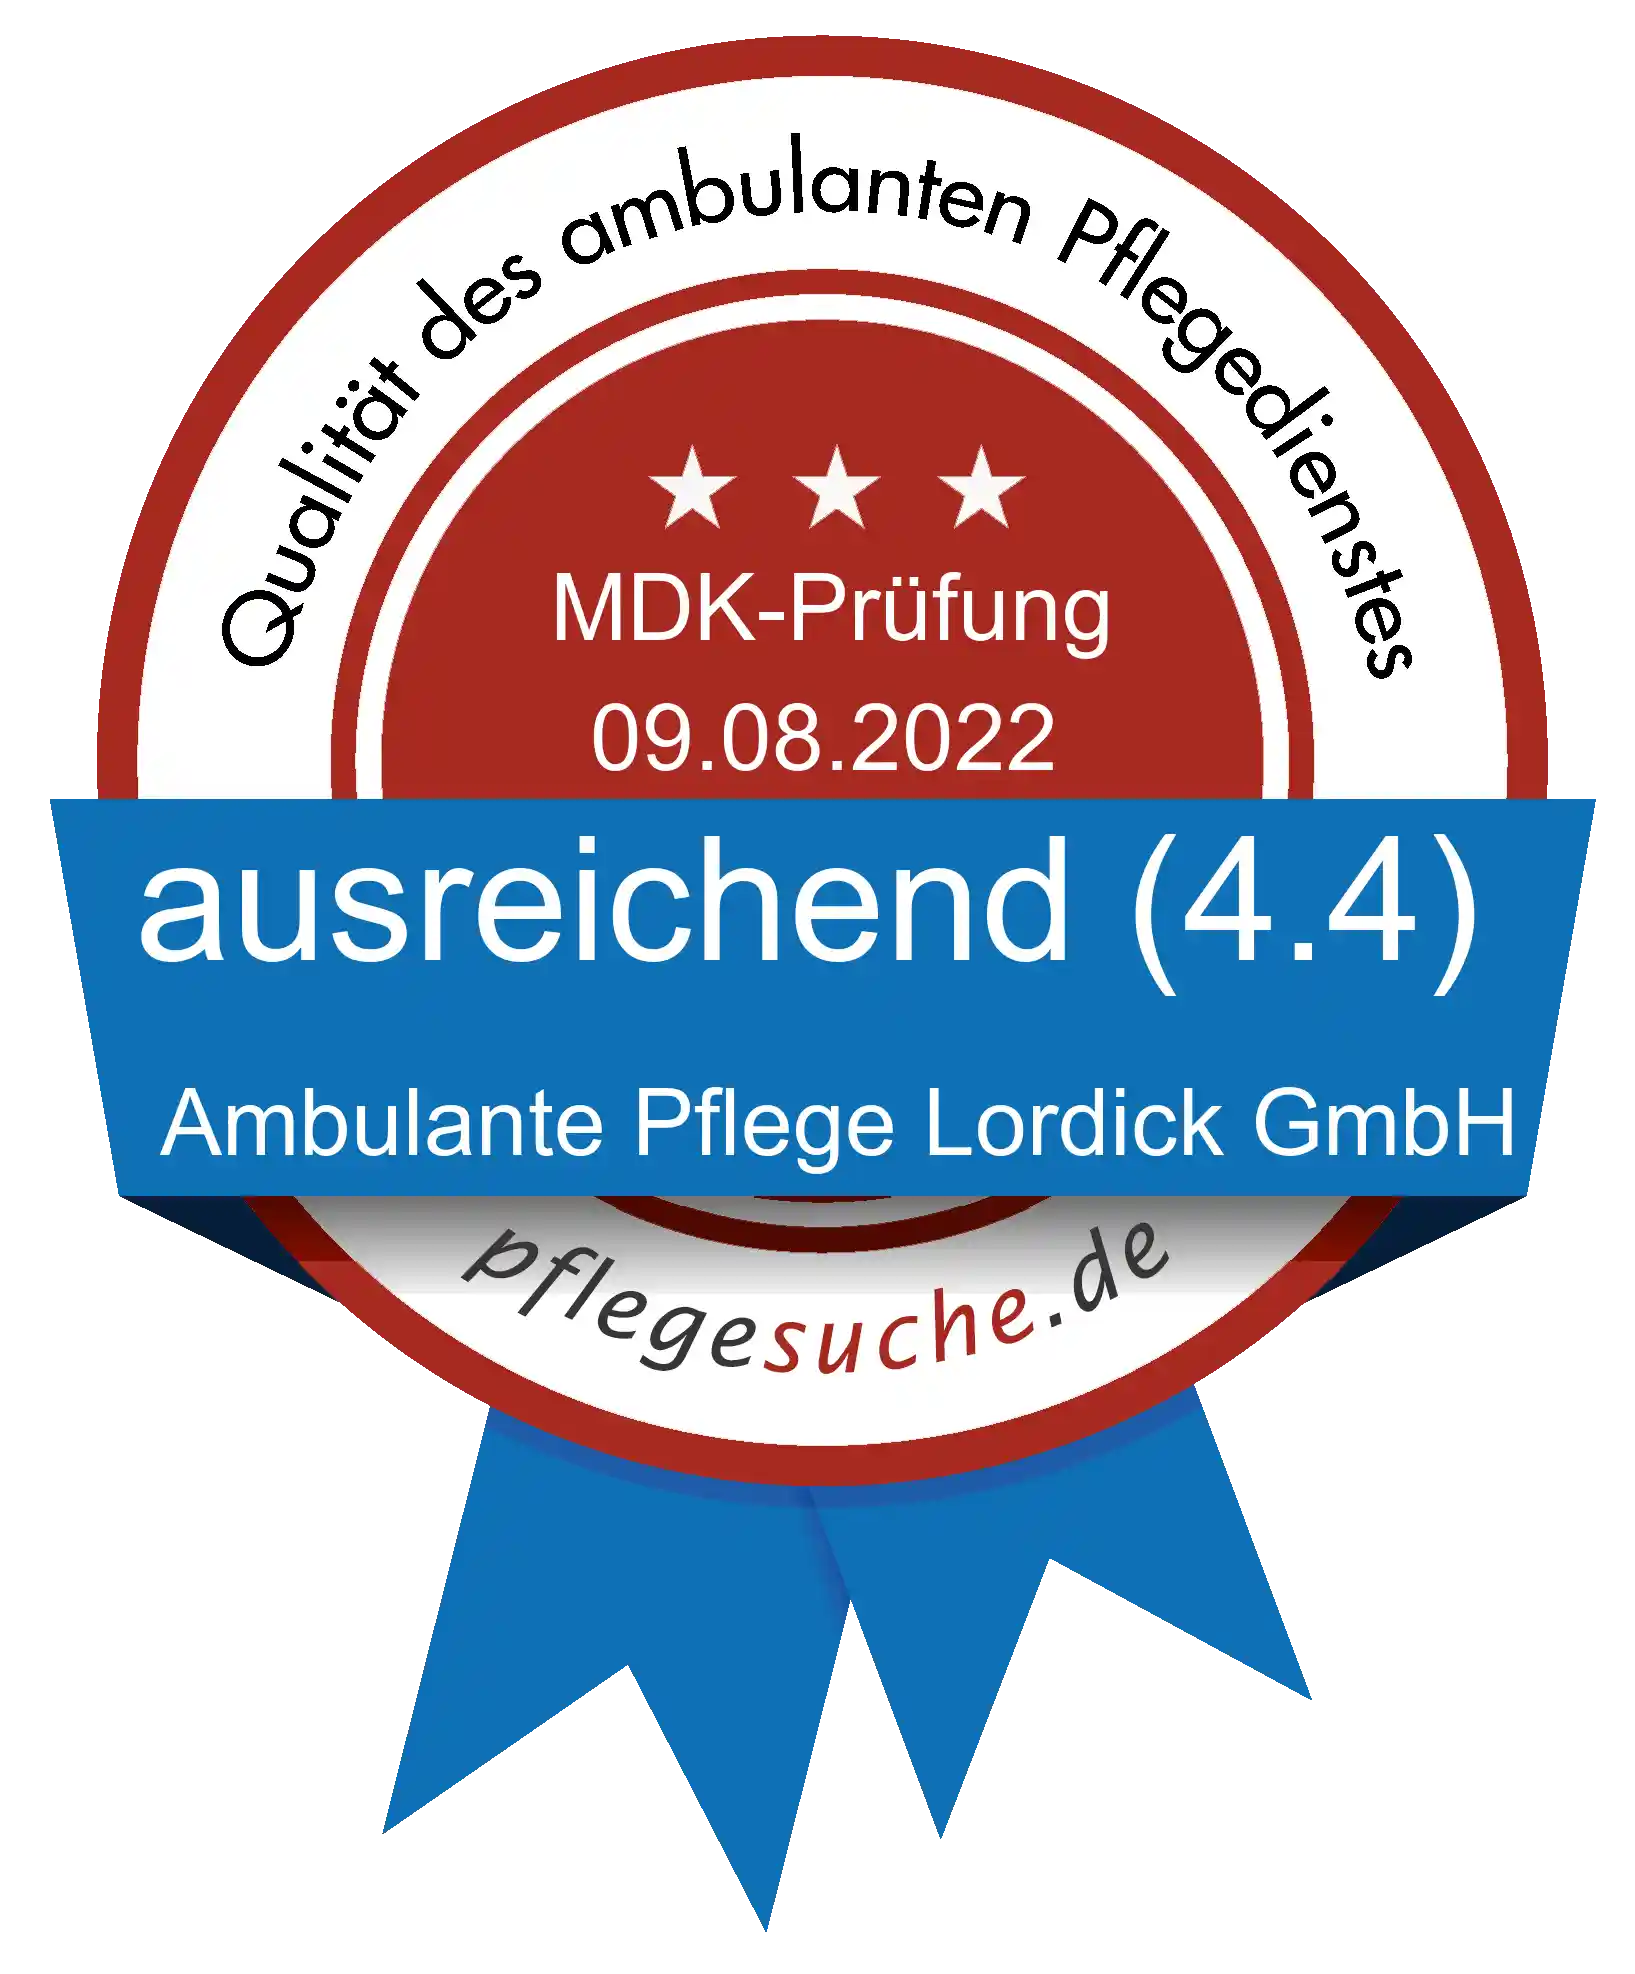 Siegel Benotung: Ambulante Pflege Lordick GmbH